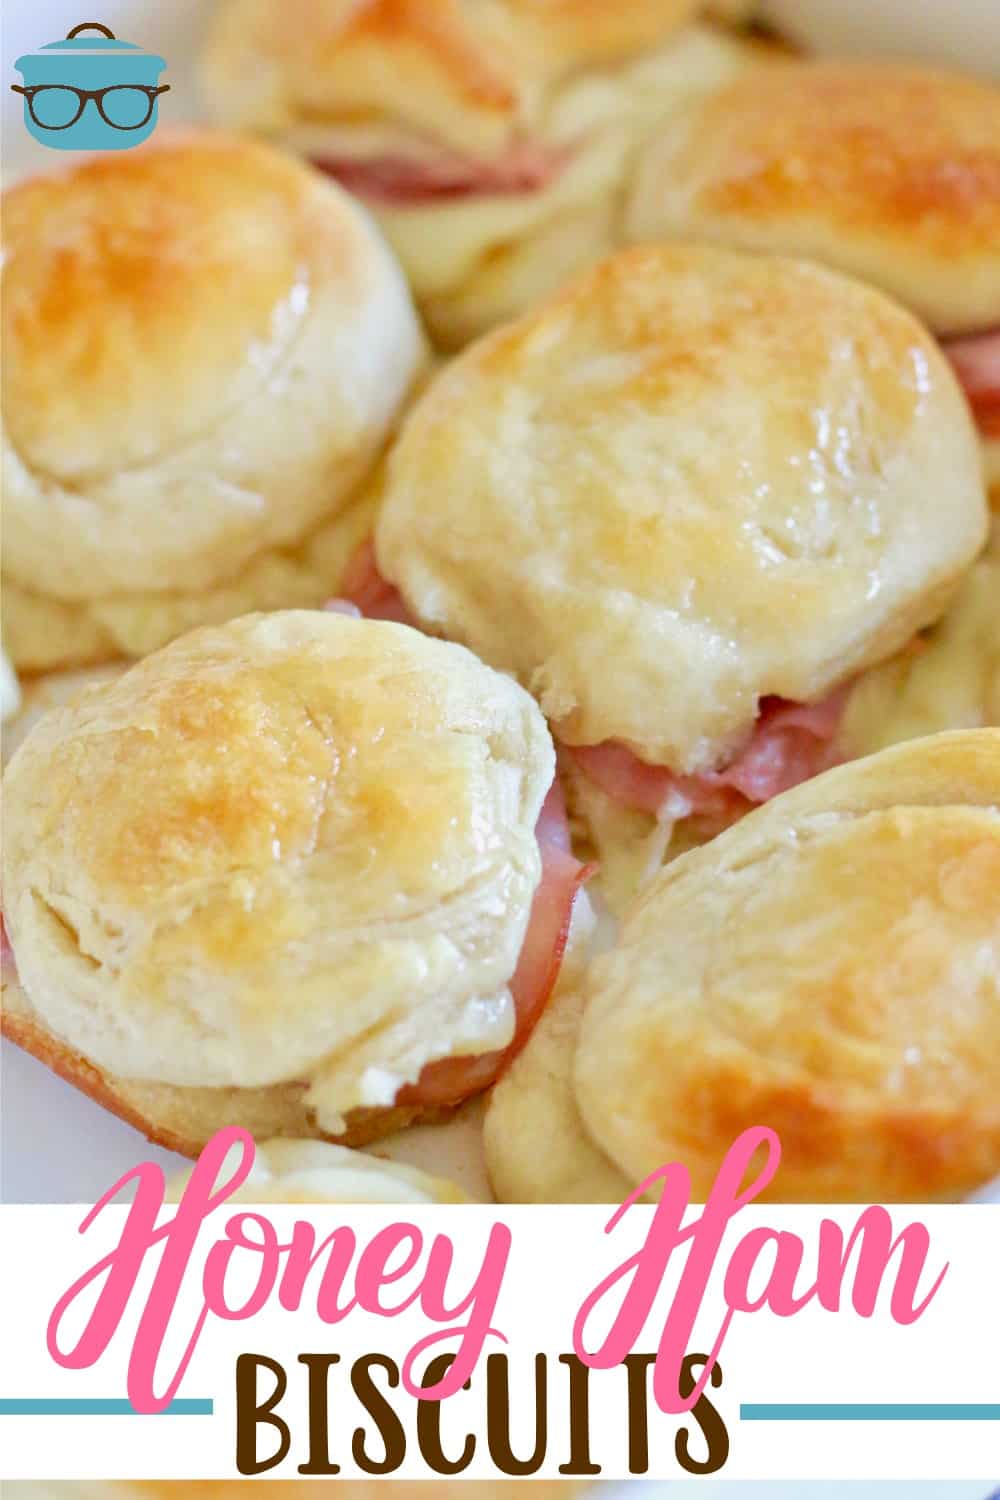 Warm Honey Ham Biscuits shown layered in a white baking dish.